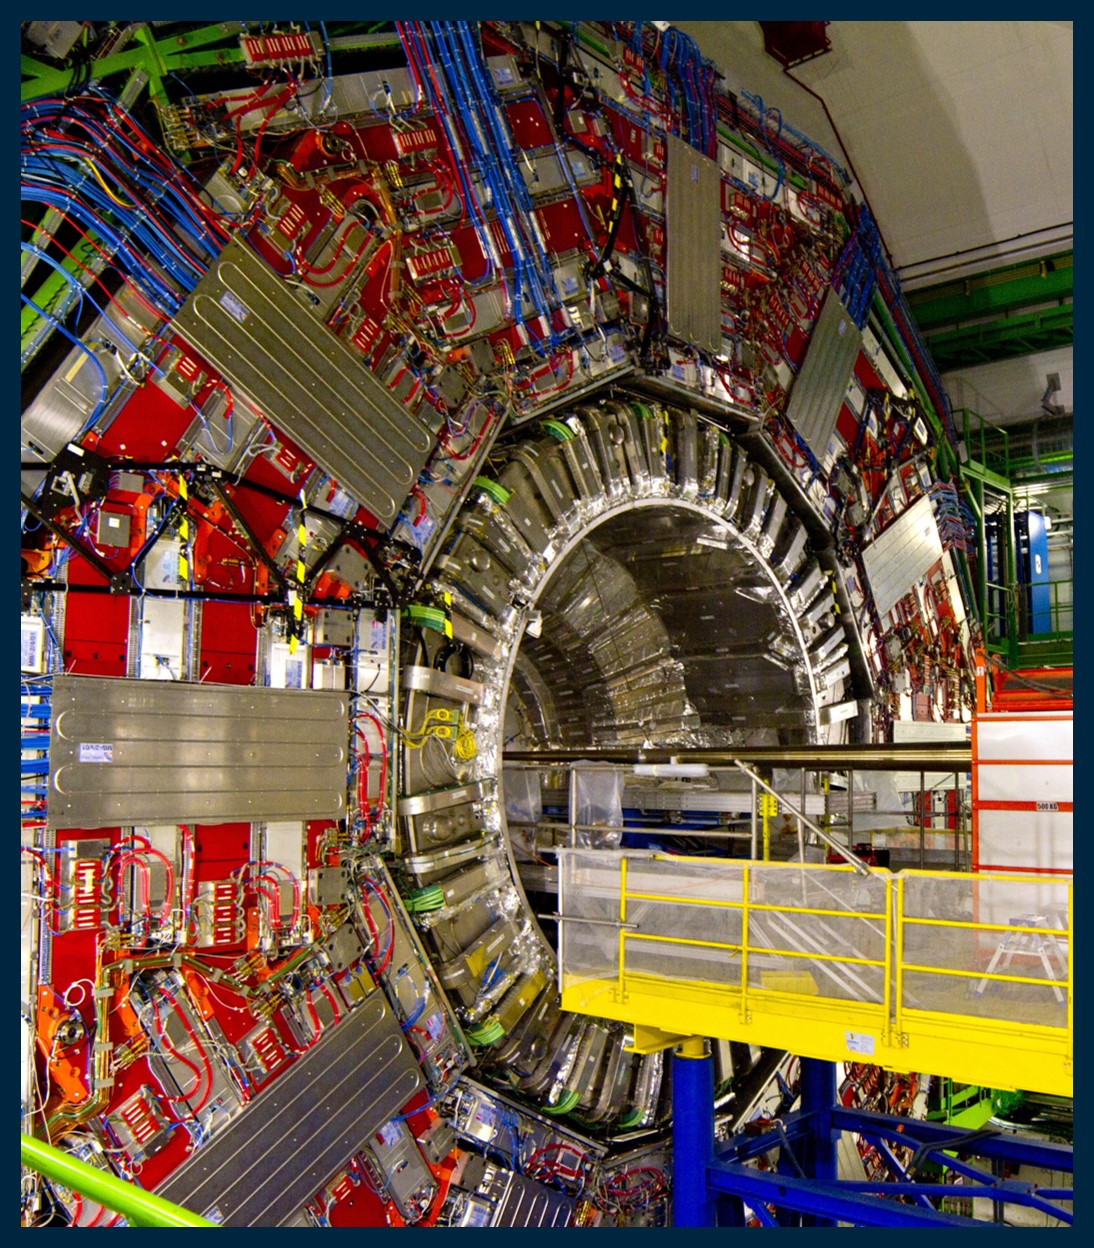 The Large Hadron Collider at Geneva, Switzerland.